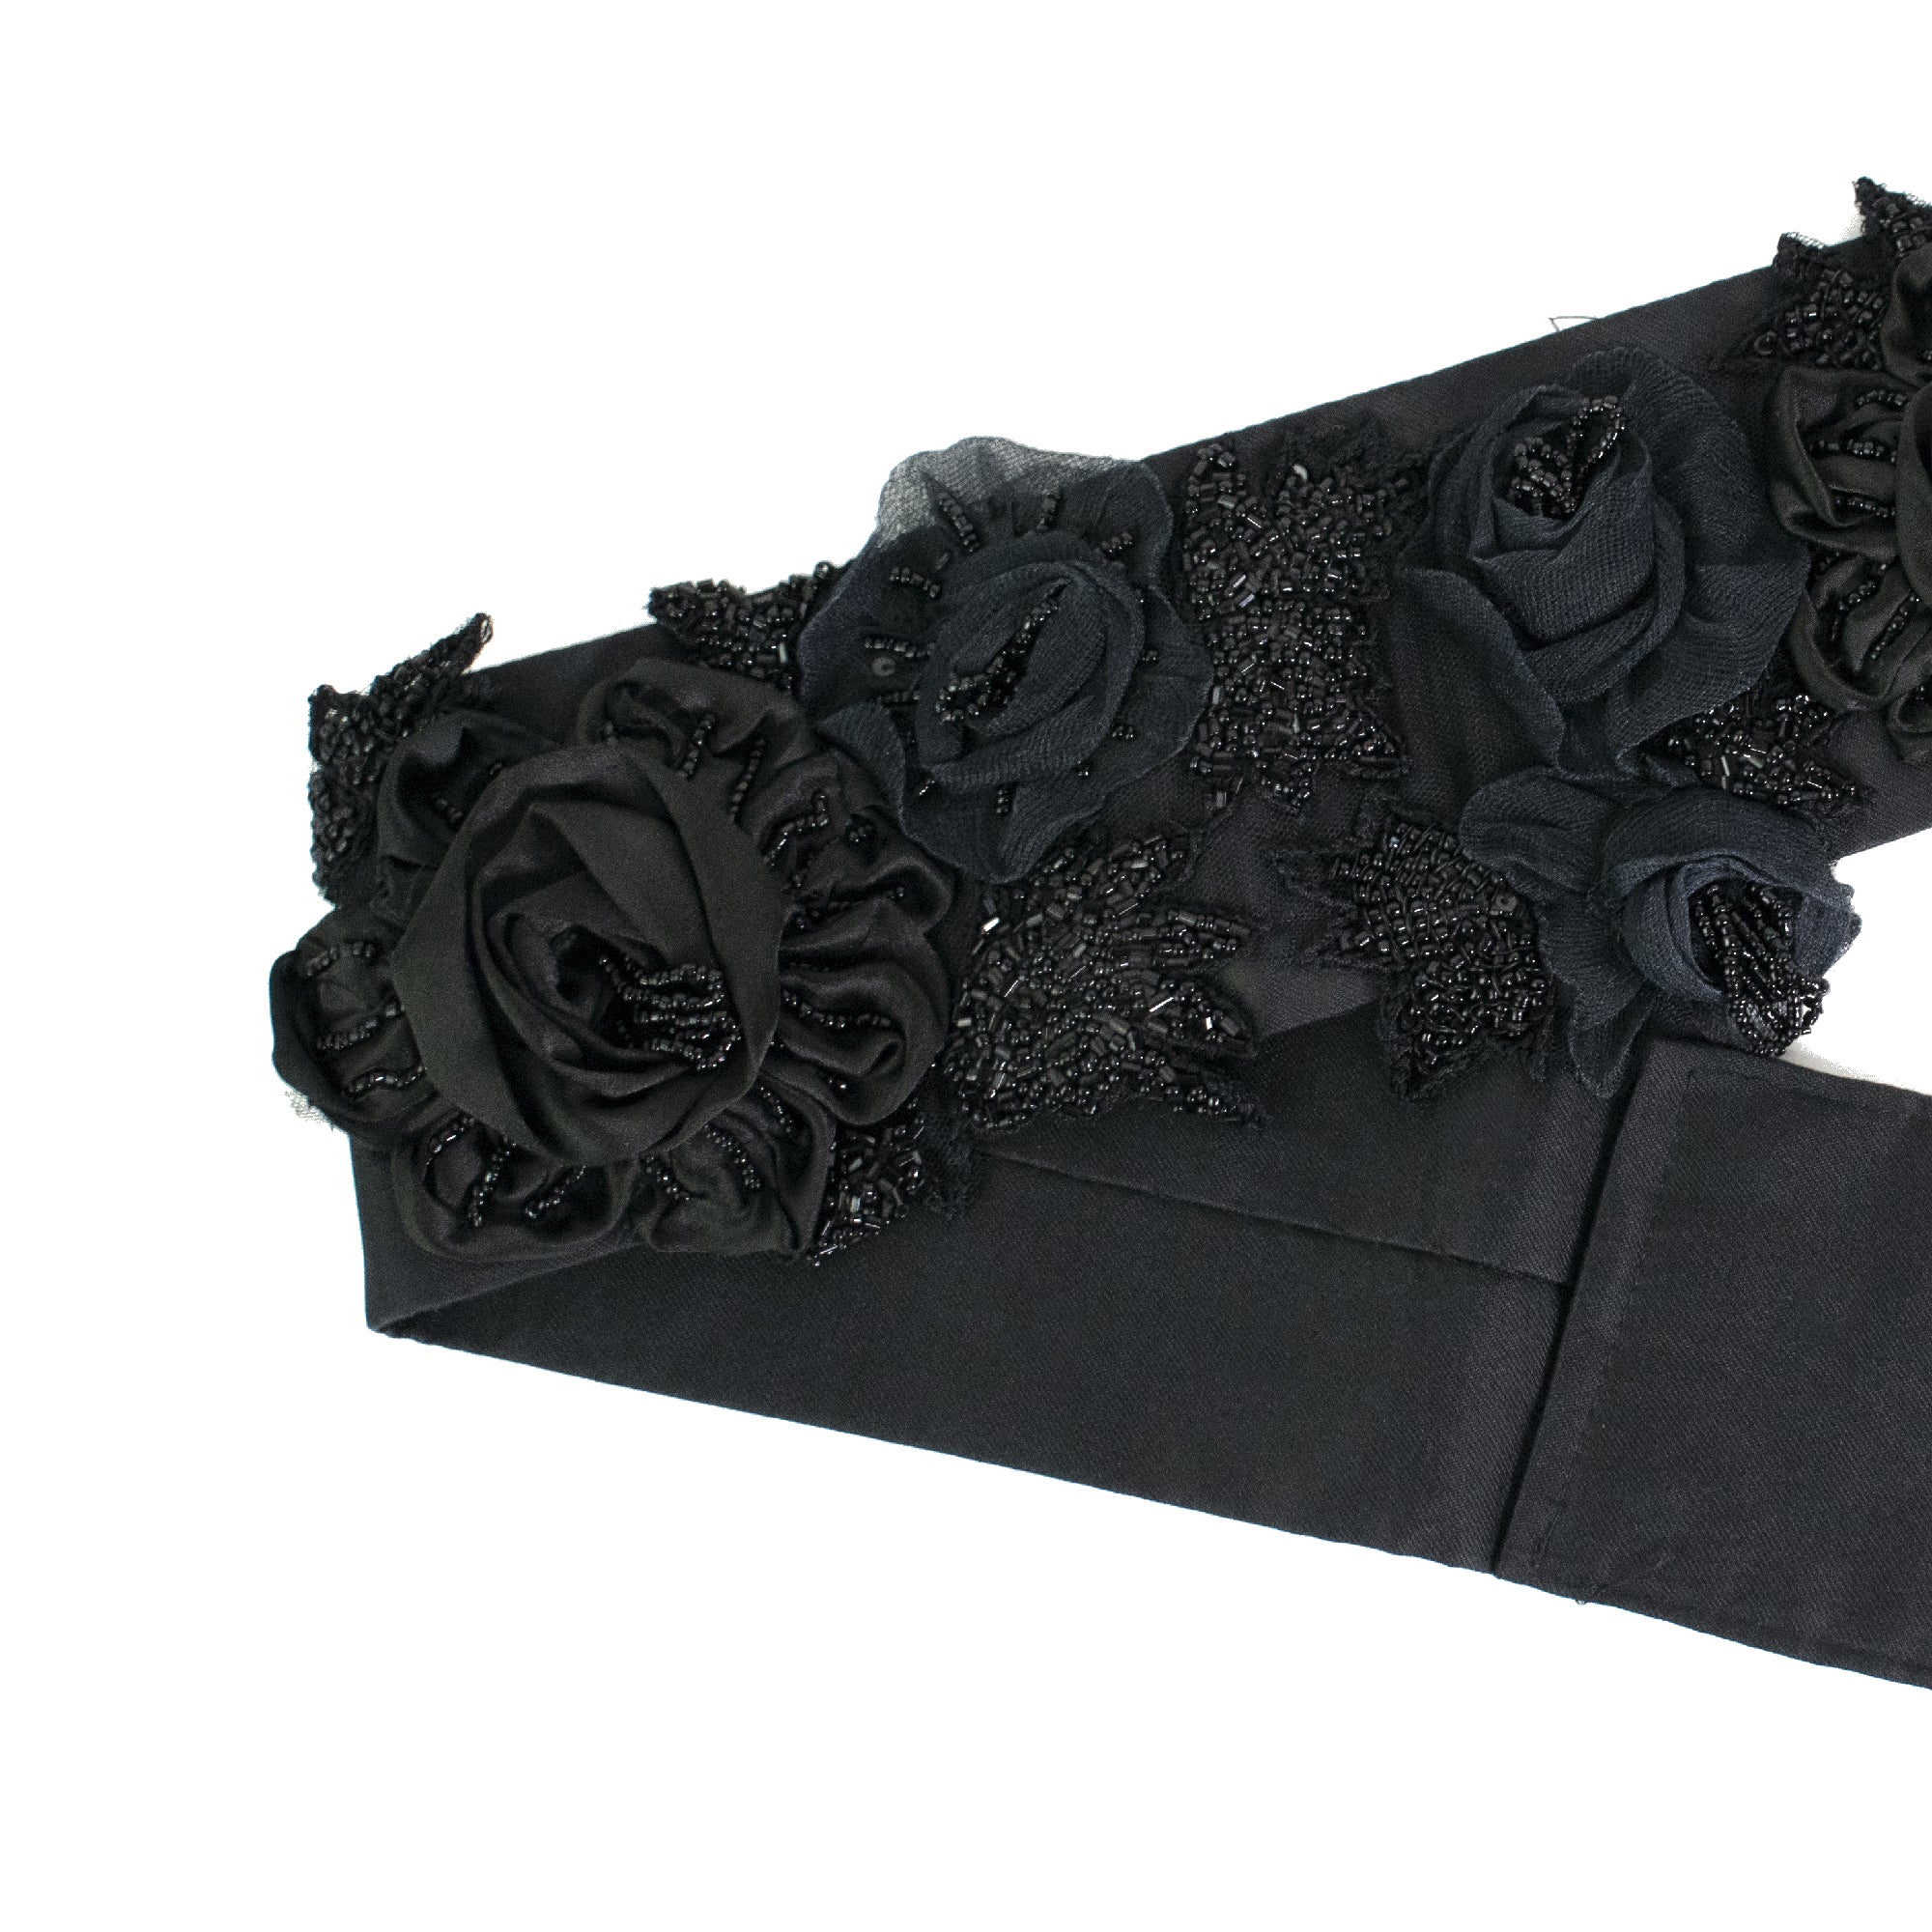 Maxi black belt with three-dimensional flowers